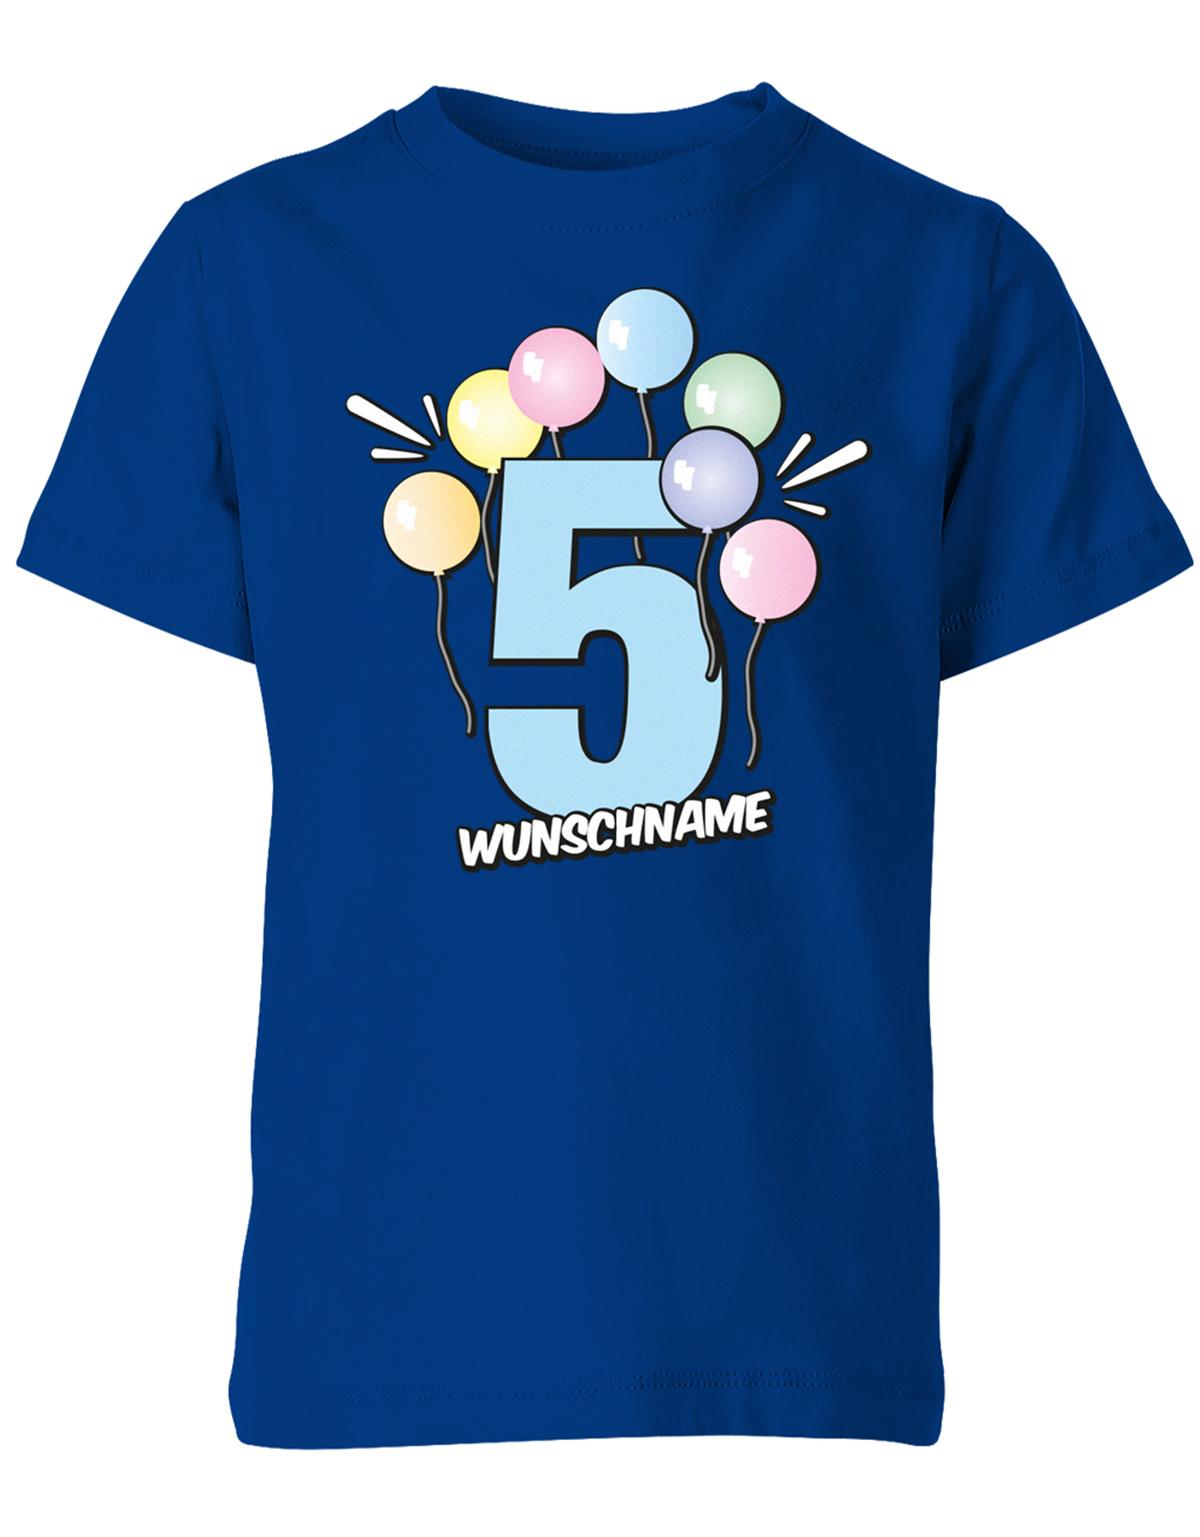 Luftballons-pastell-5-geburtstag-wunschname-kinder-shirt-royalblau